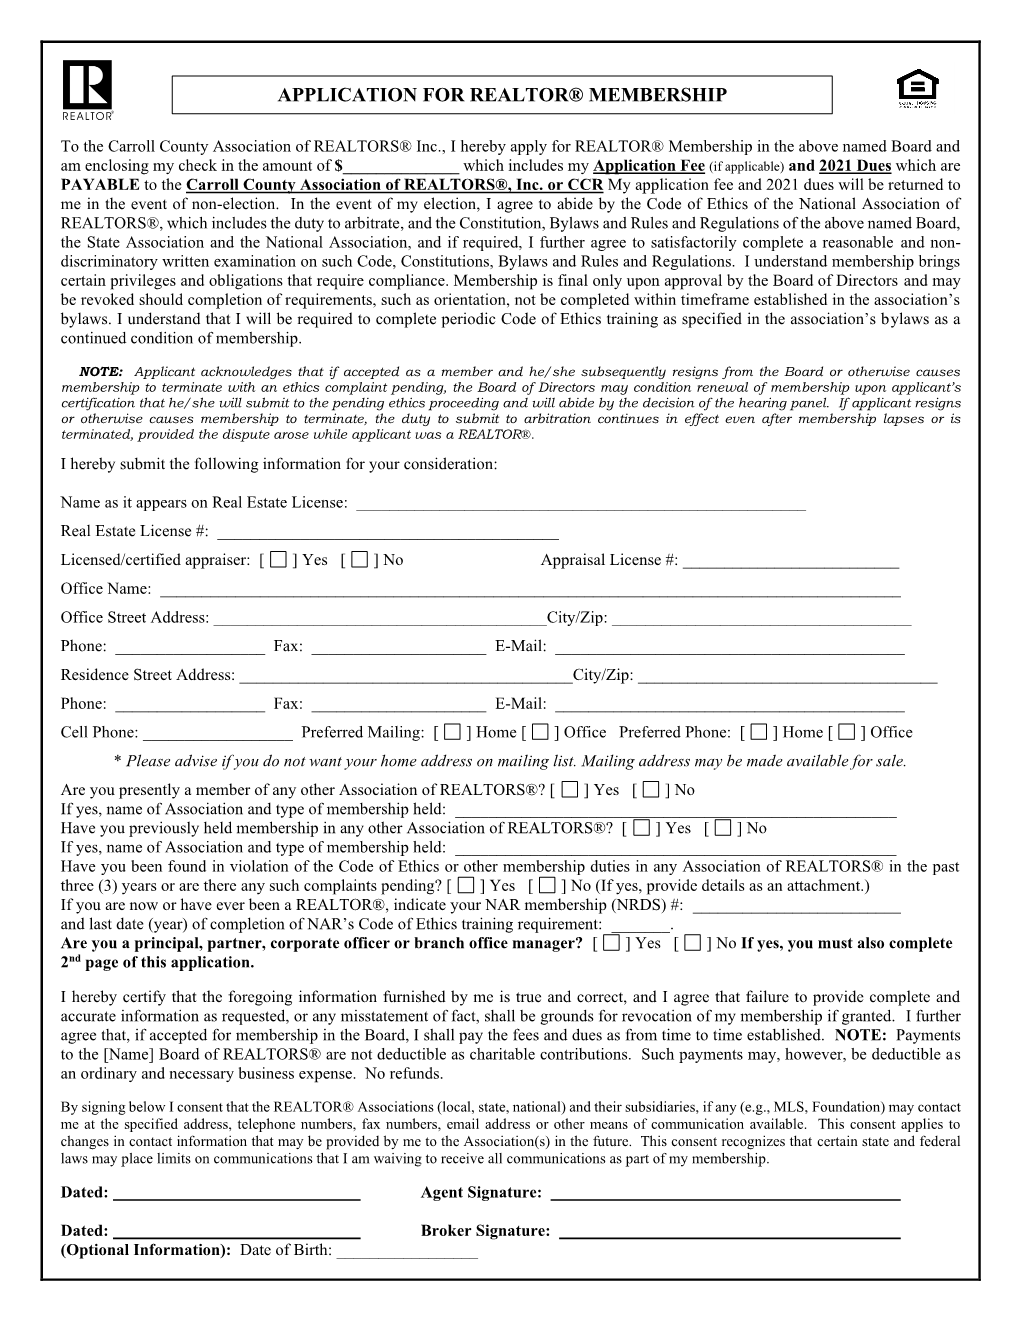 Application for Realtor® Membership